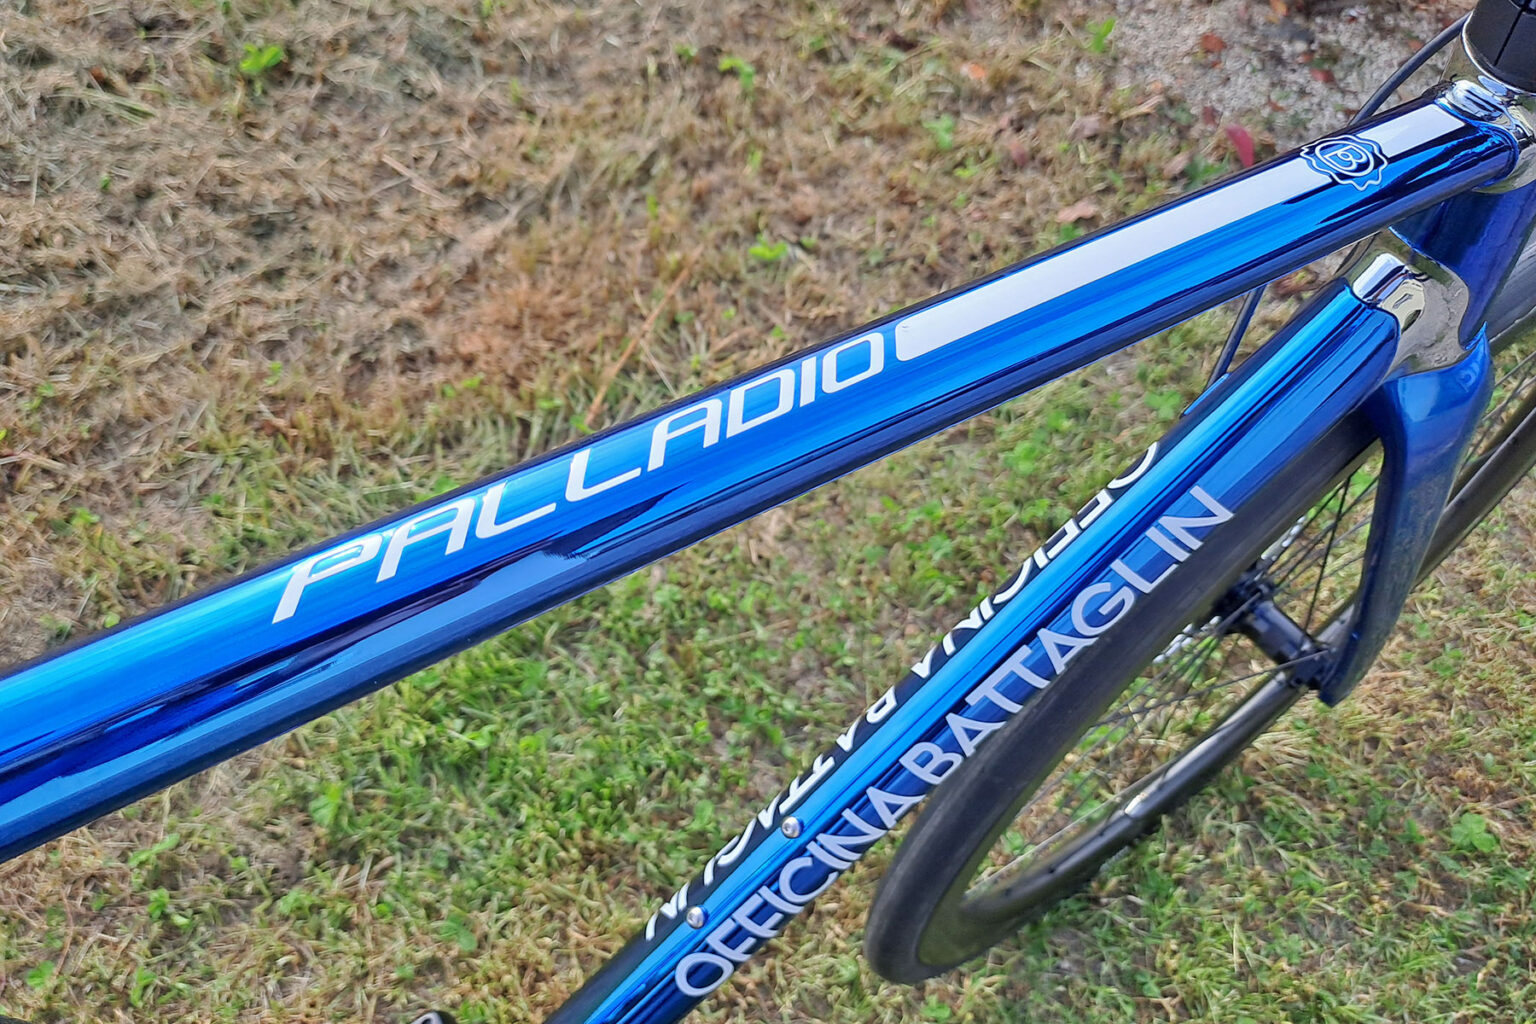 Battaglin Palladio Cromovelato For You, custom-finished Italian steel bikes,